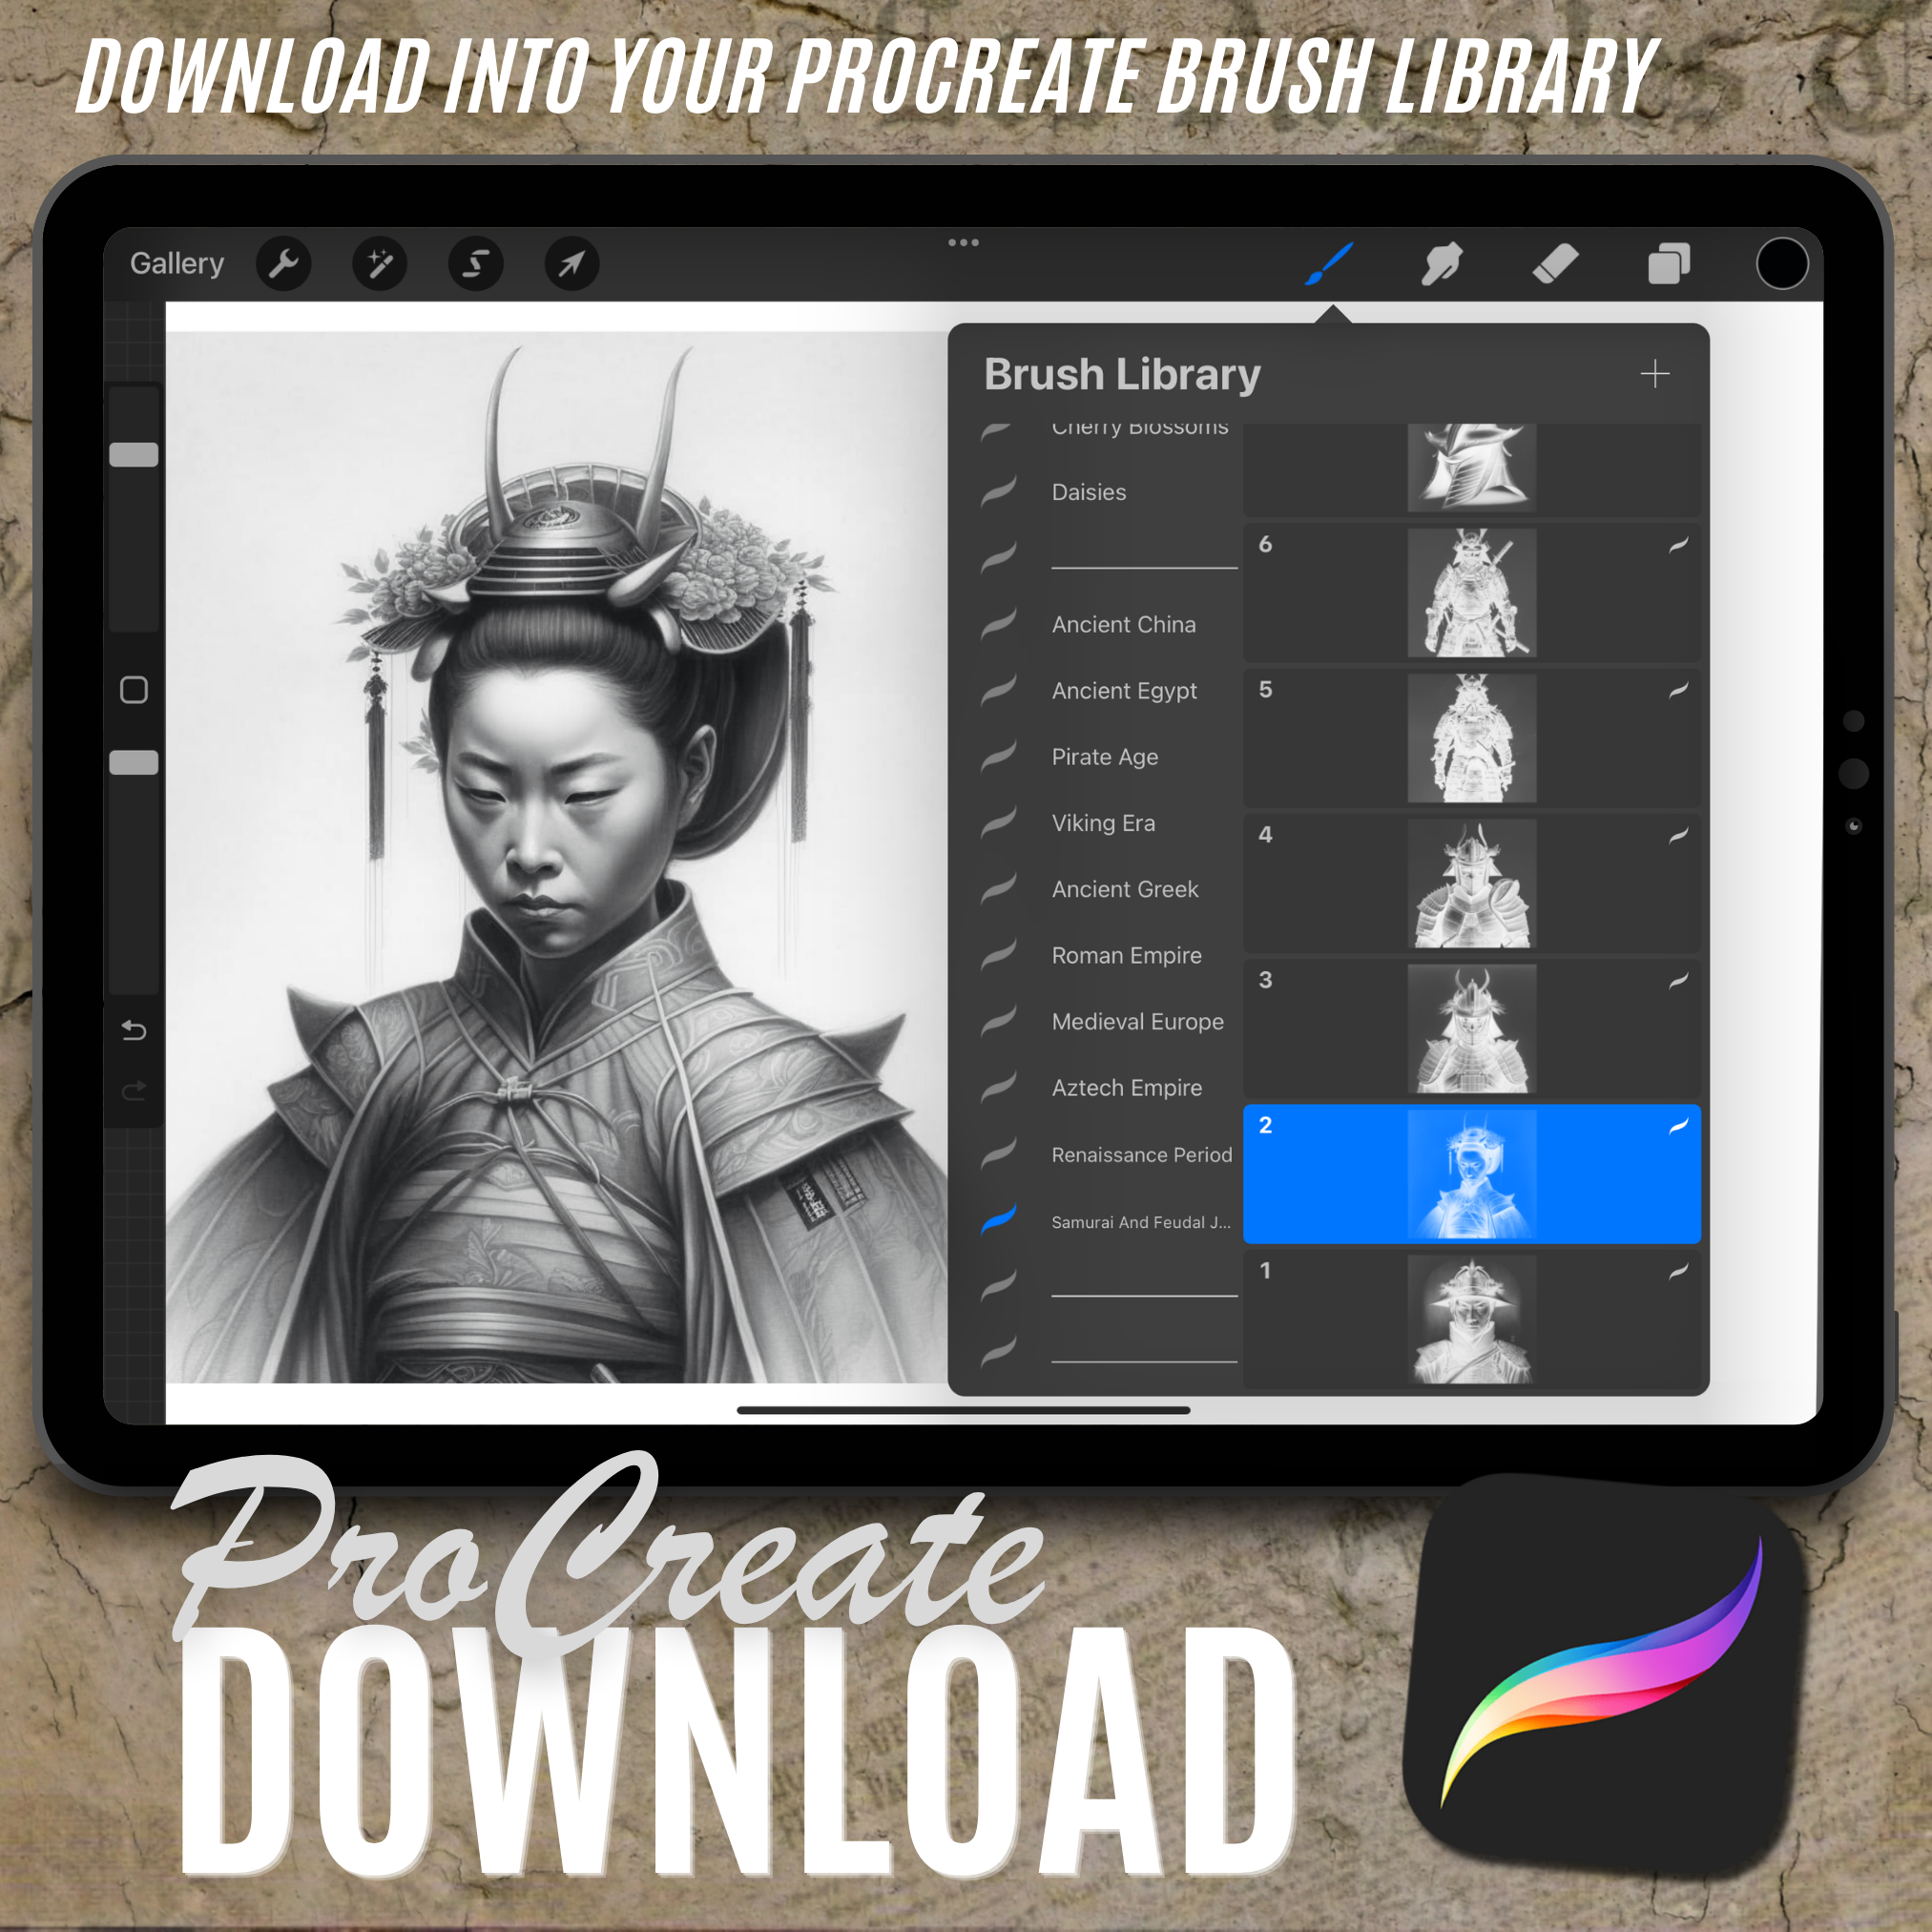 Samurai and Feudal Japan Digital Design Collection: 100 Procreate & Sketchbook Images